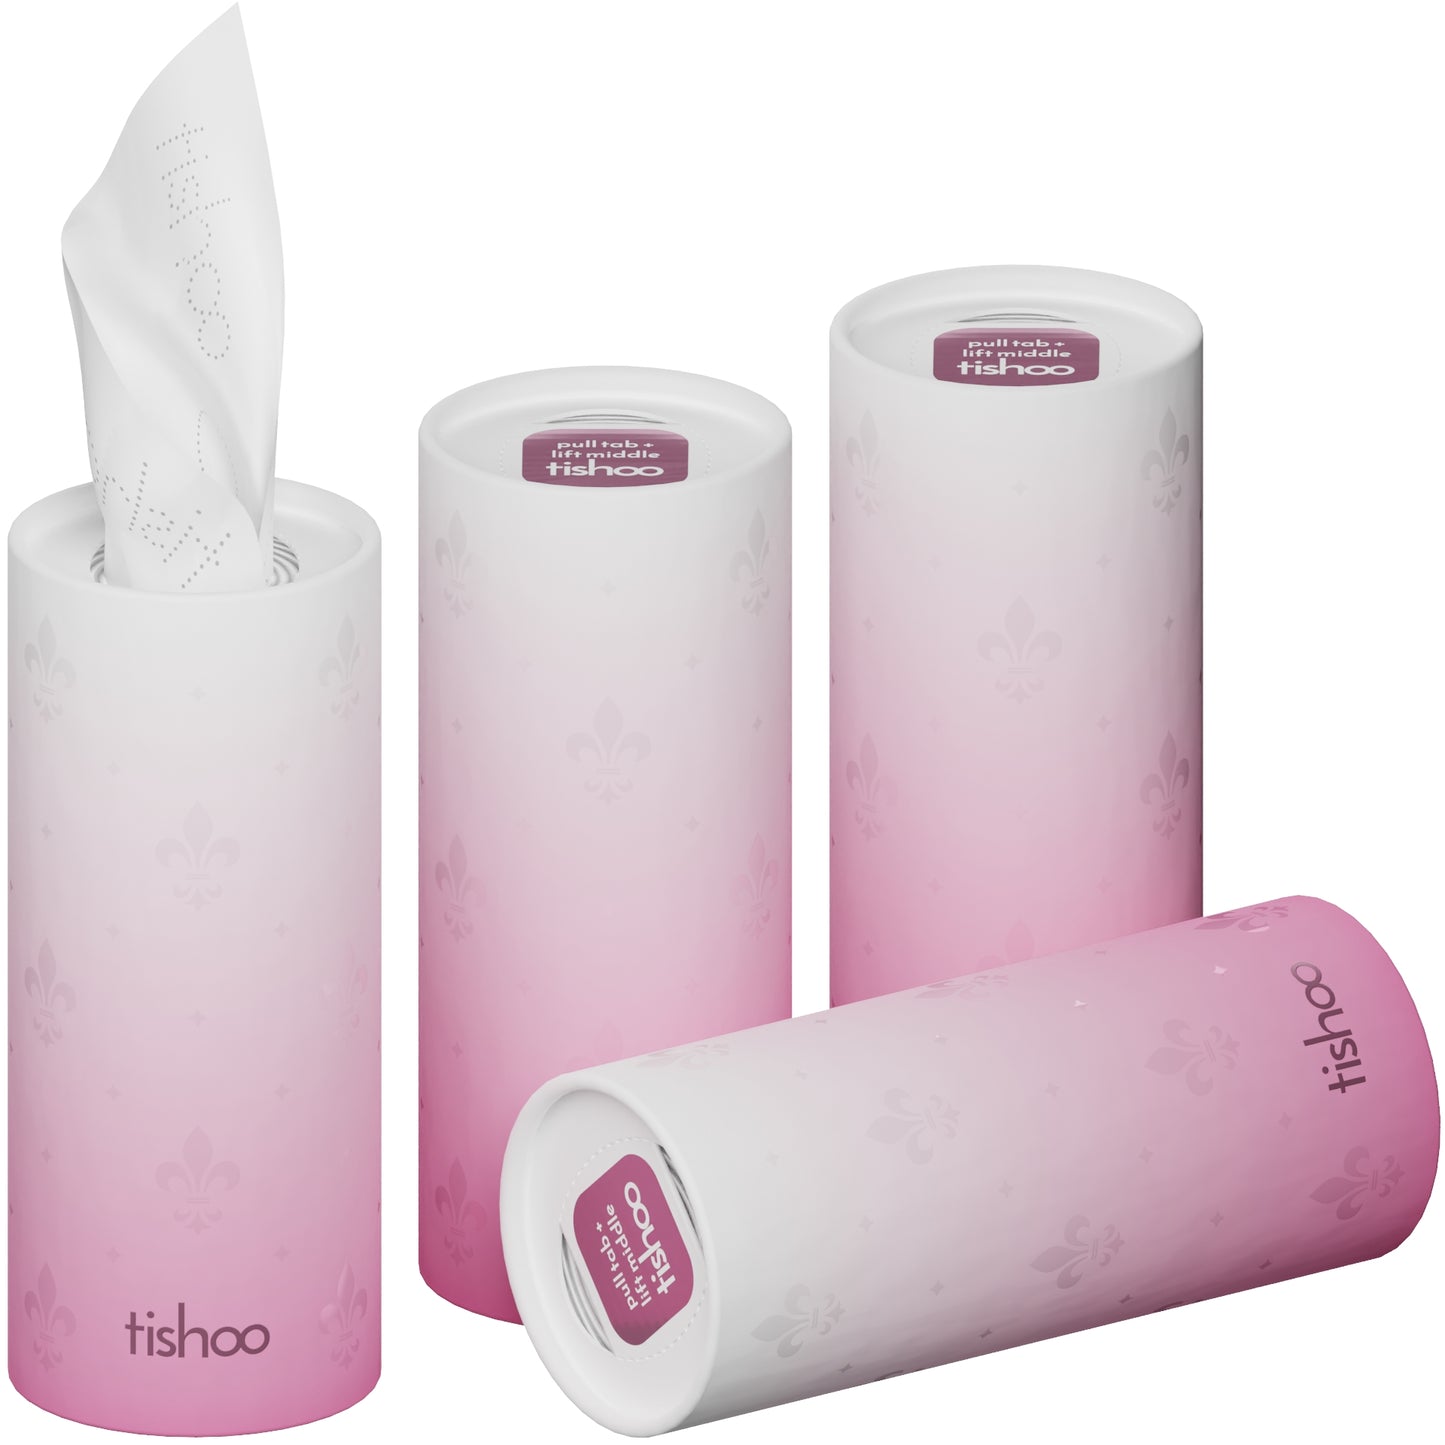 tishoo Luxury Tissues Pink/Rose 4 tubes